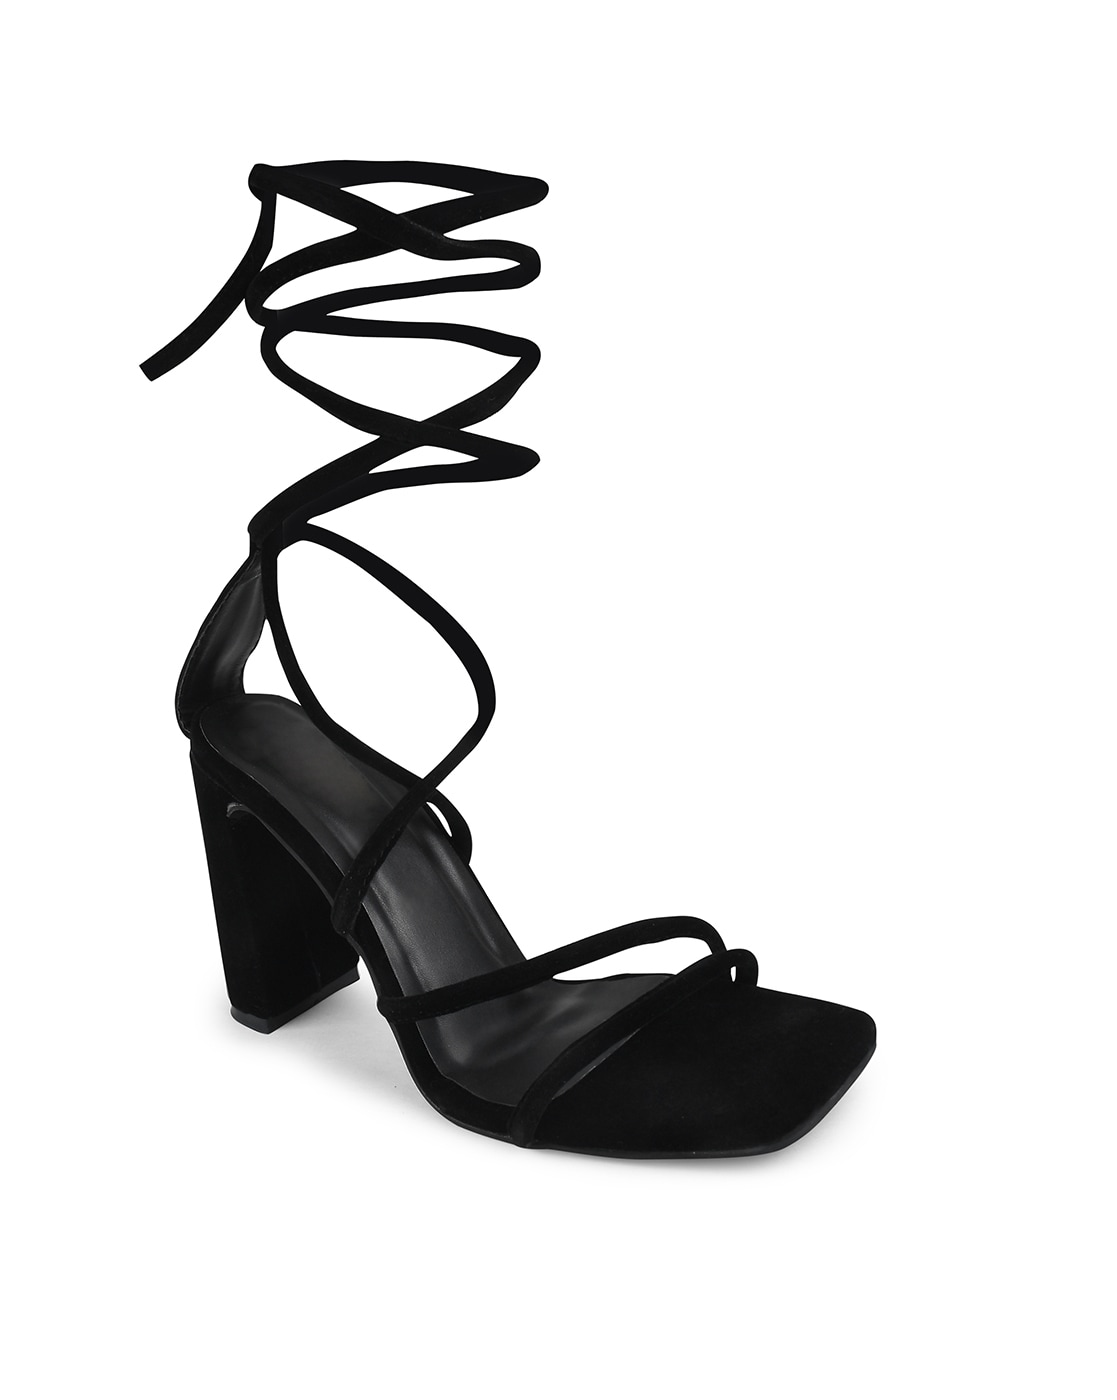 Black Block Heel Sandal | Shoes | Sandals heels, Block heels sandal, Black  block heels